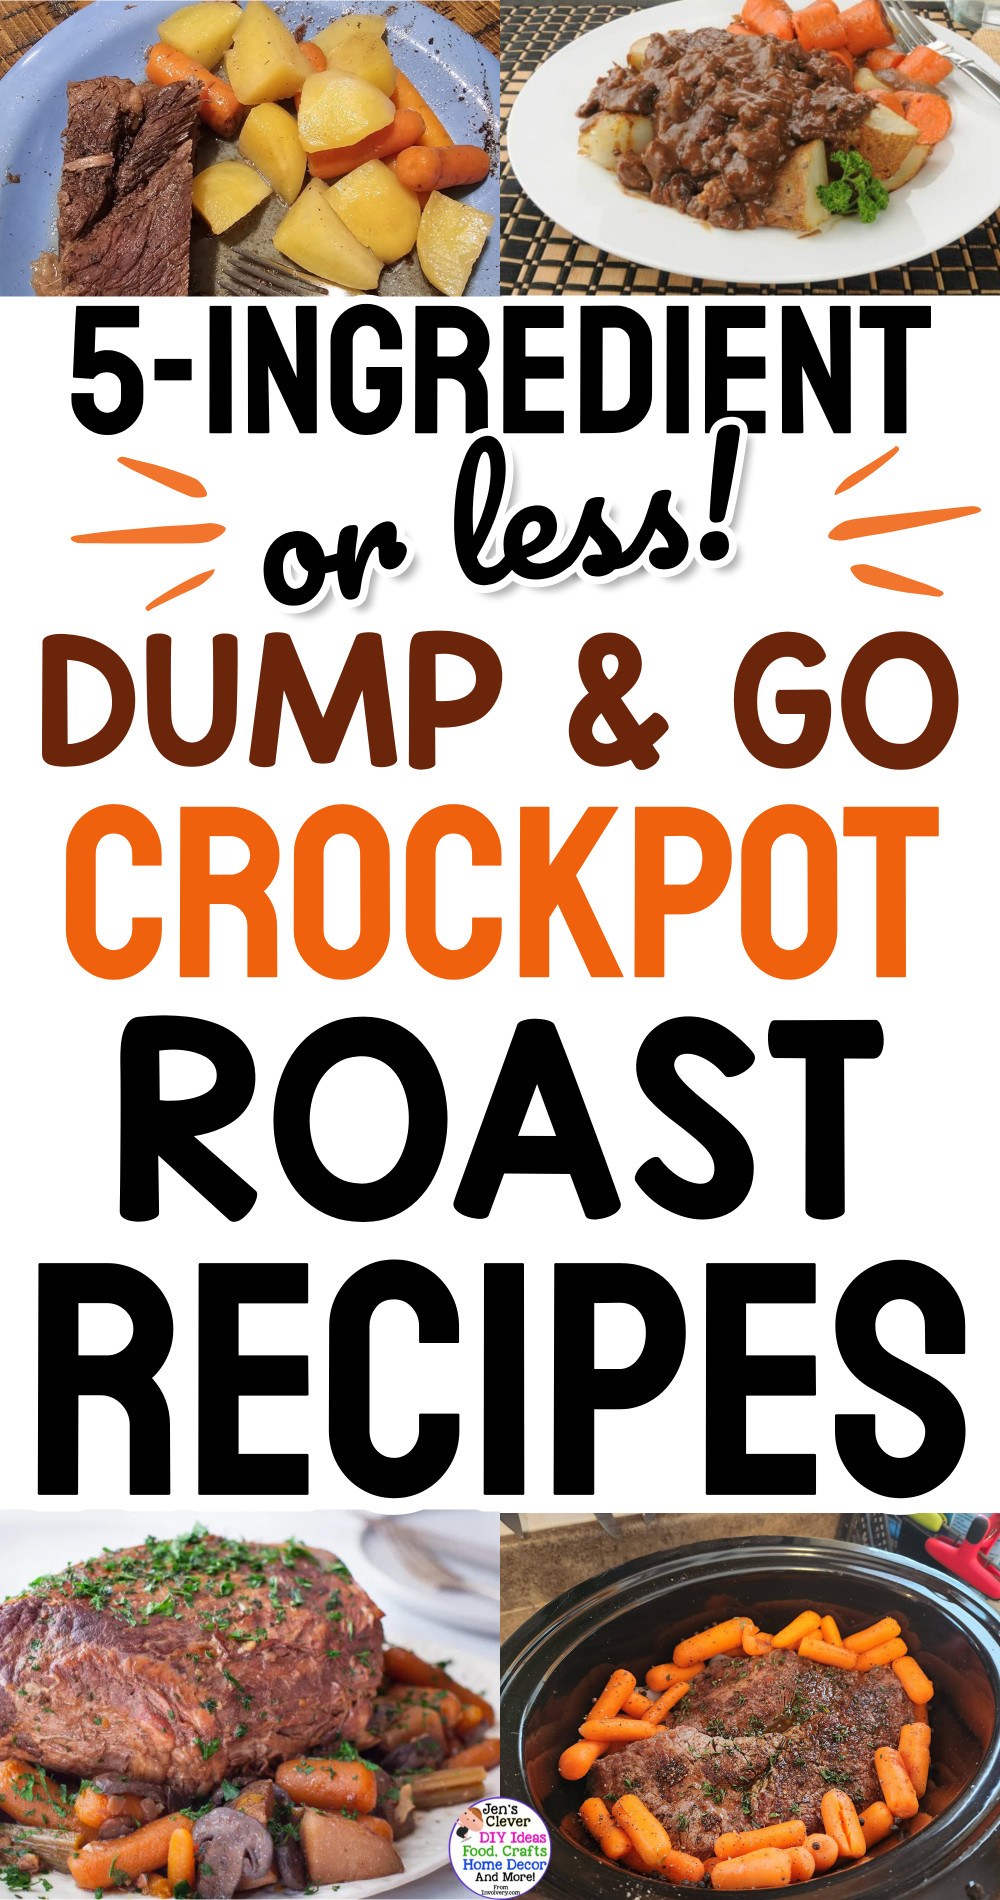 Dump and Go Crockpot Roast Recipes